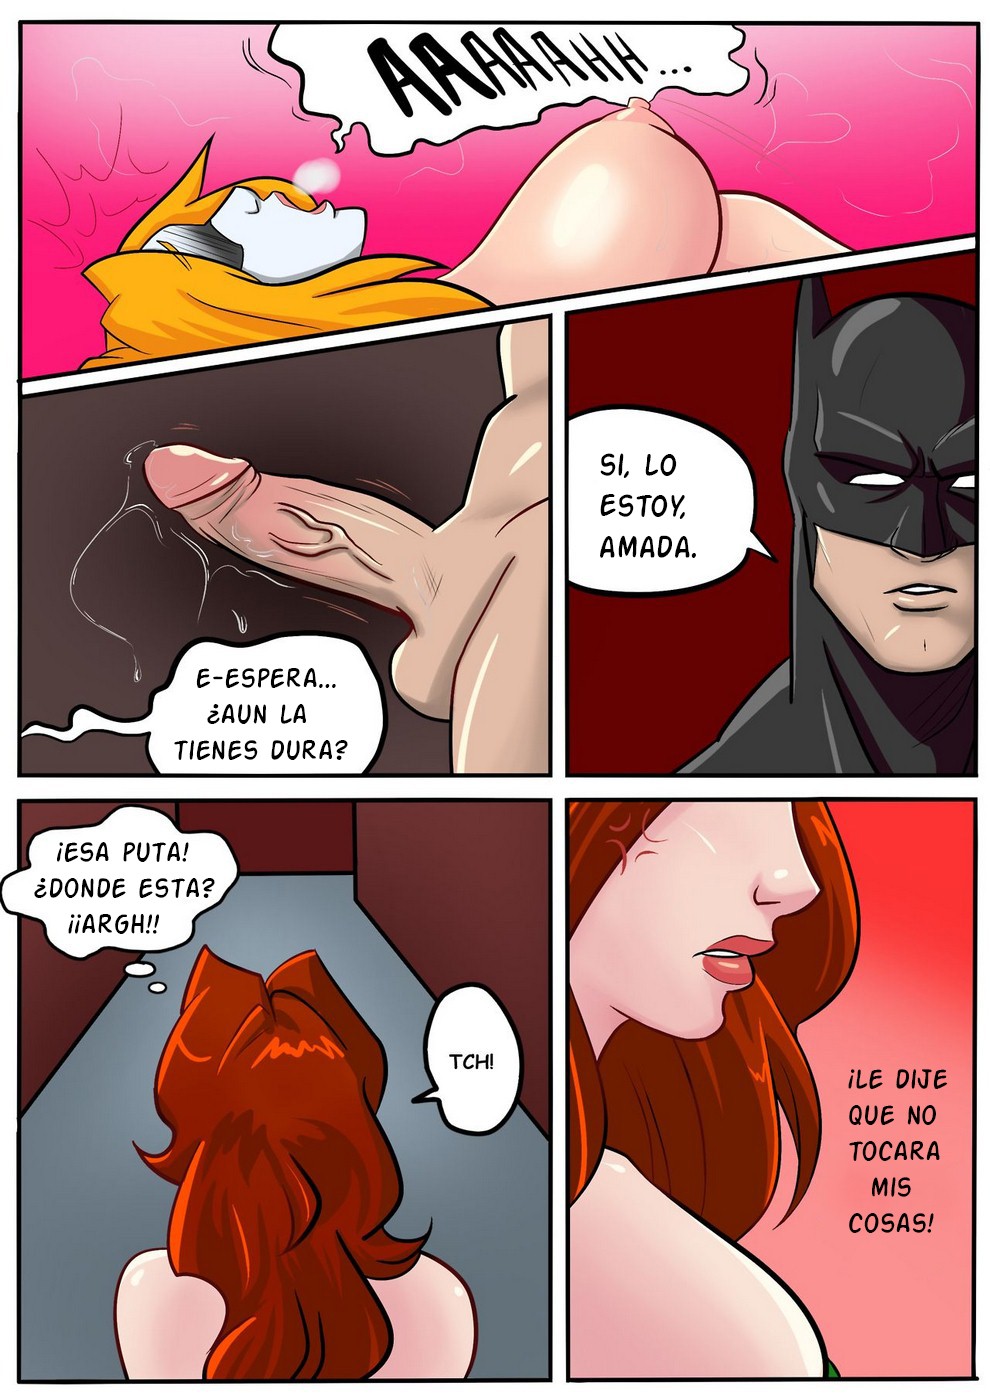 Sexy Joke ...!!! (Harley Quenn and Batman)